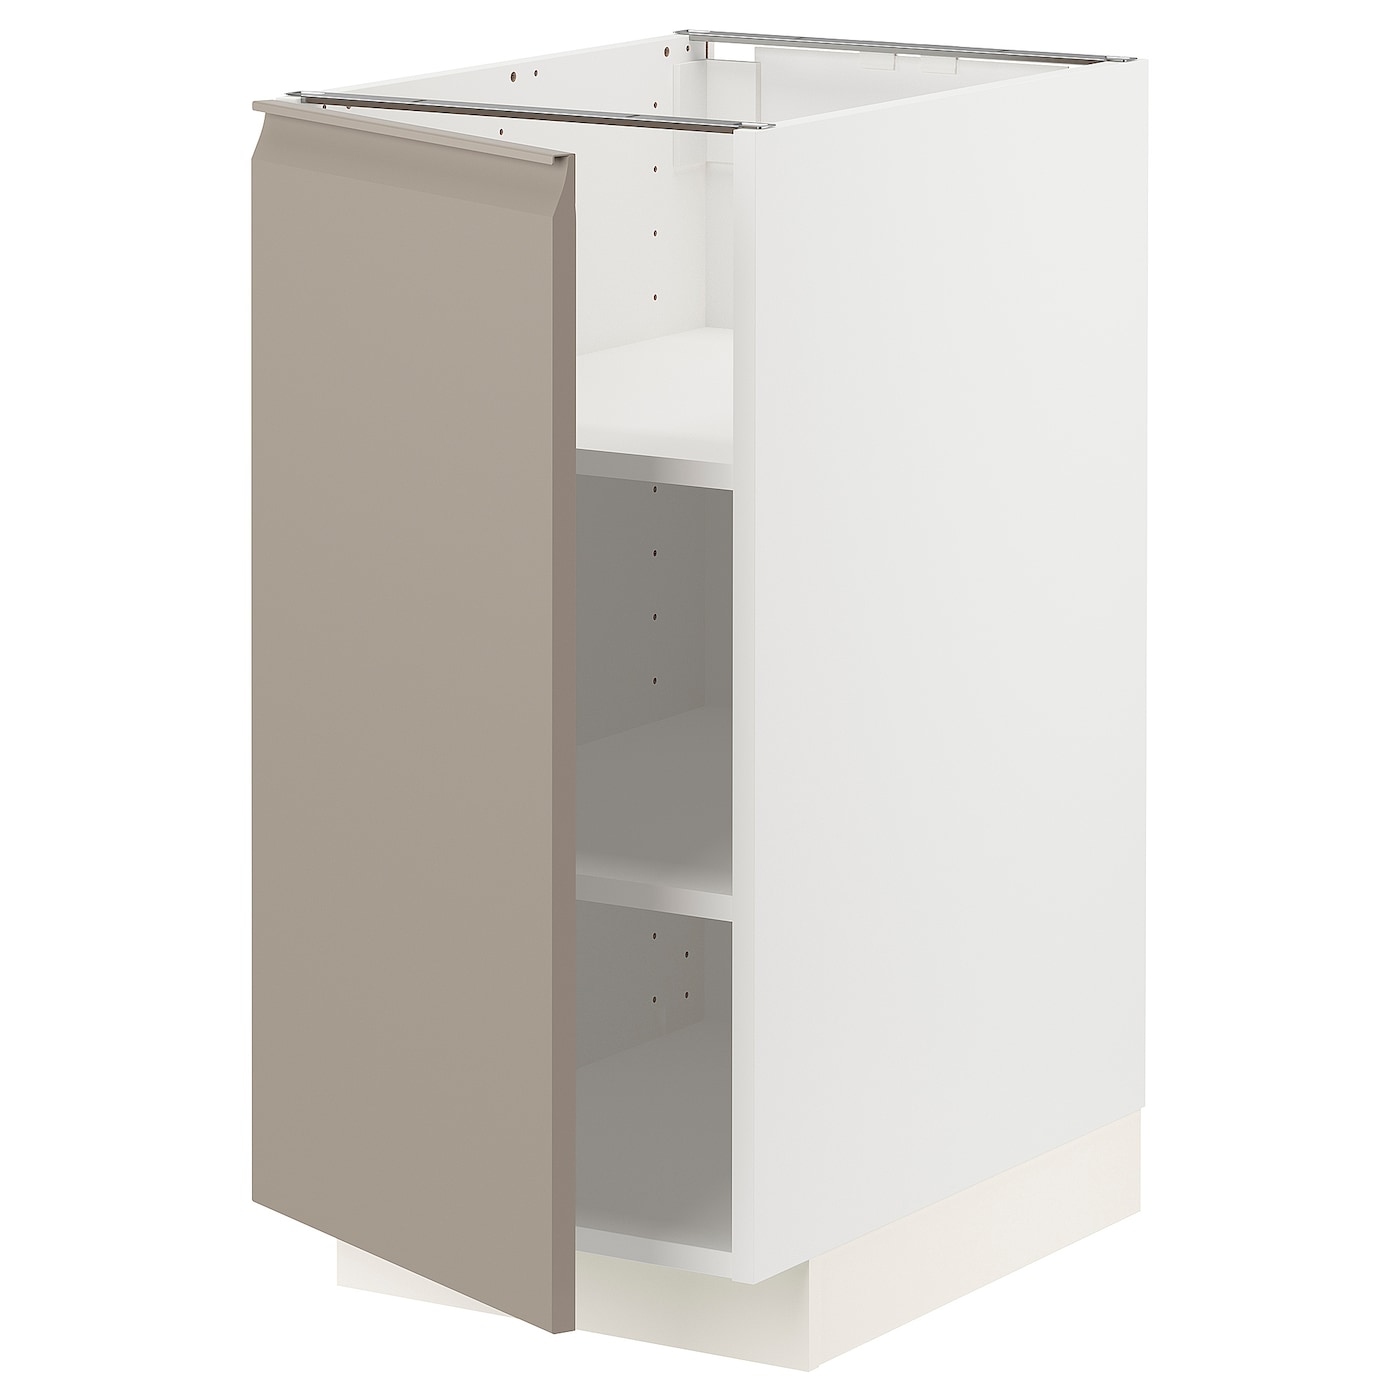 Напольный шкаф - METOD IKEA/ МЕТОД ИКЕА,  88х40 см, белый/бежевый